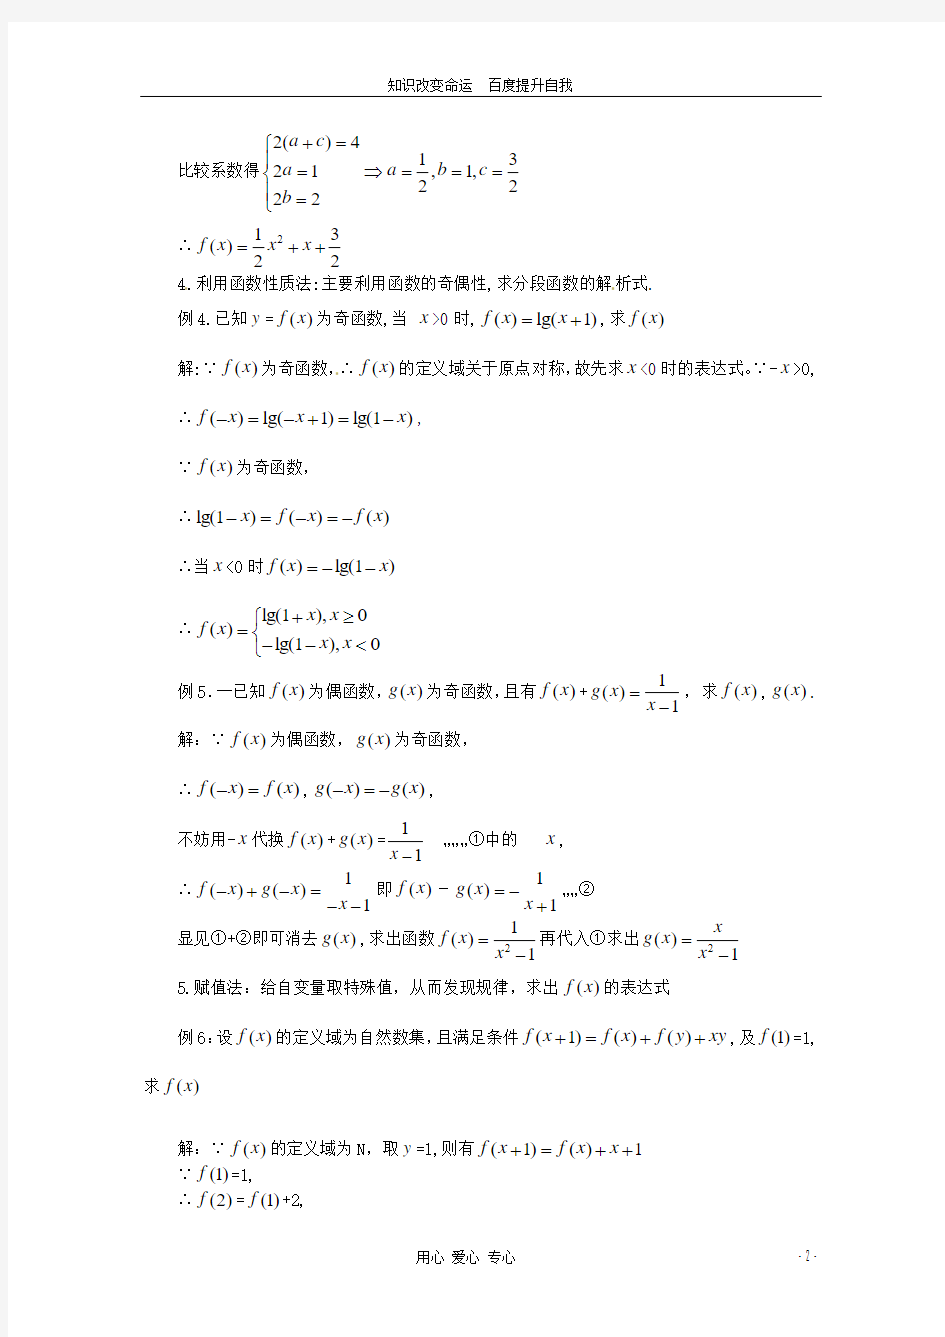 (no.1)2013年高中数学教学论文 含有函数记号“f(x) ”有关问题解法